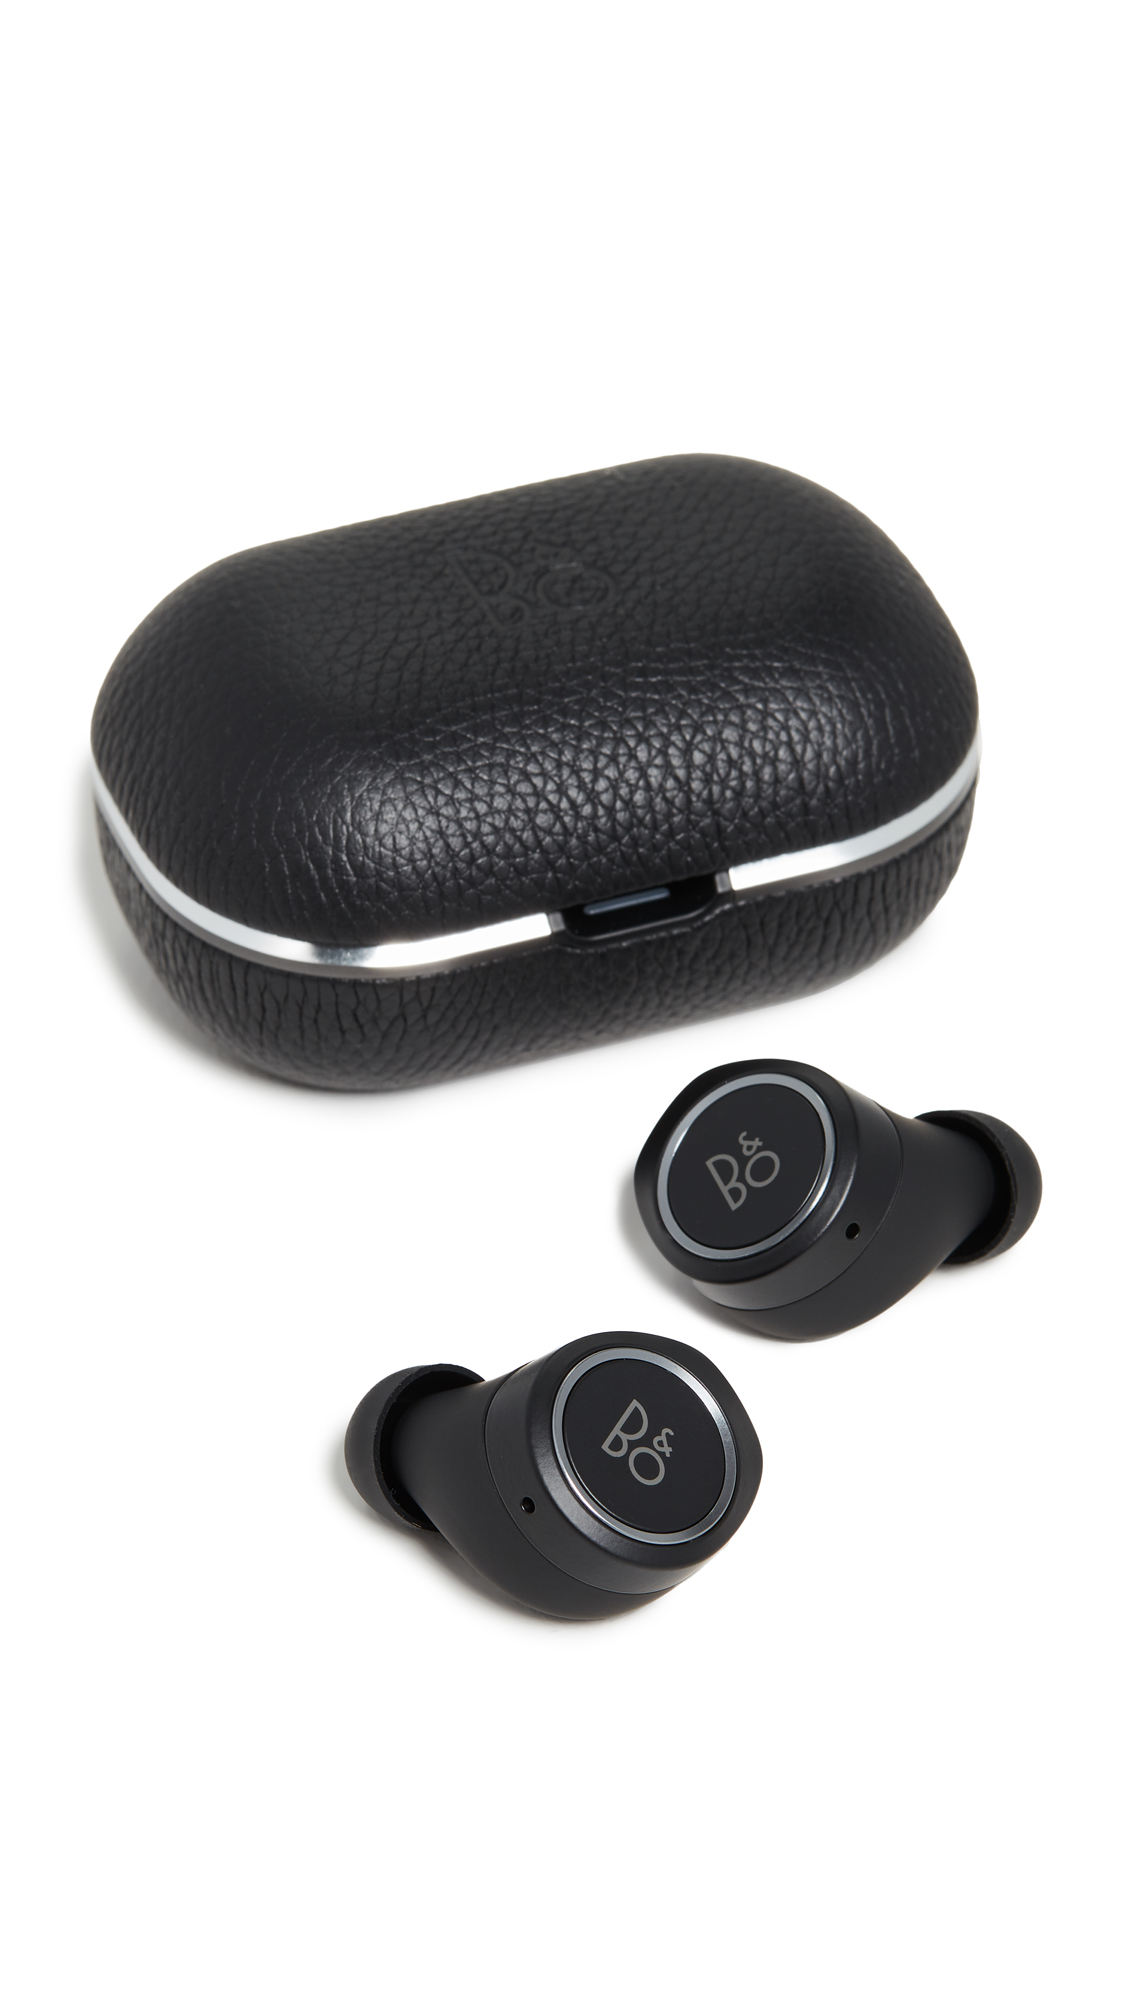 Bang & Olufsen Beoplay E8 2.0 True Wireless Earphones Qi Charging, Black, One Size - 1646100